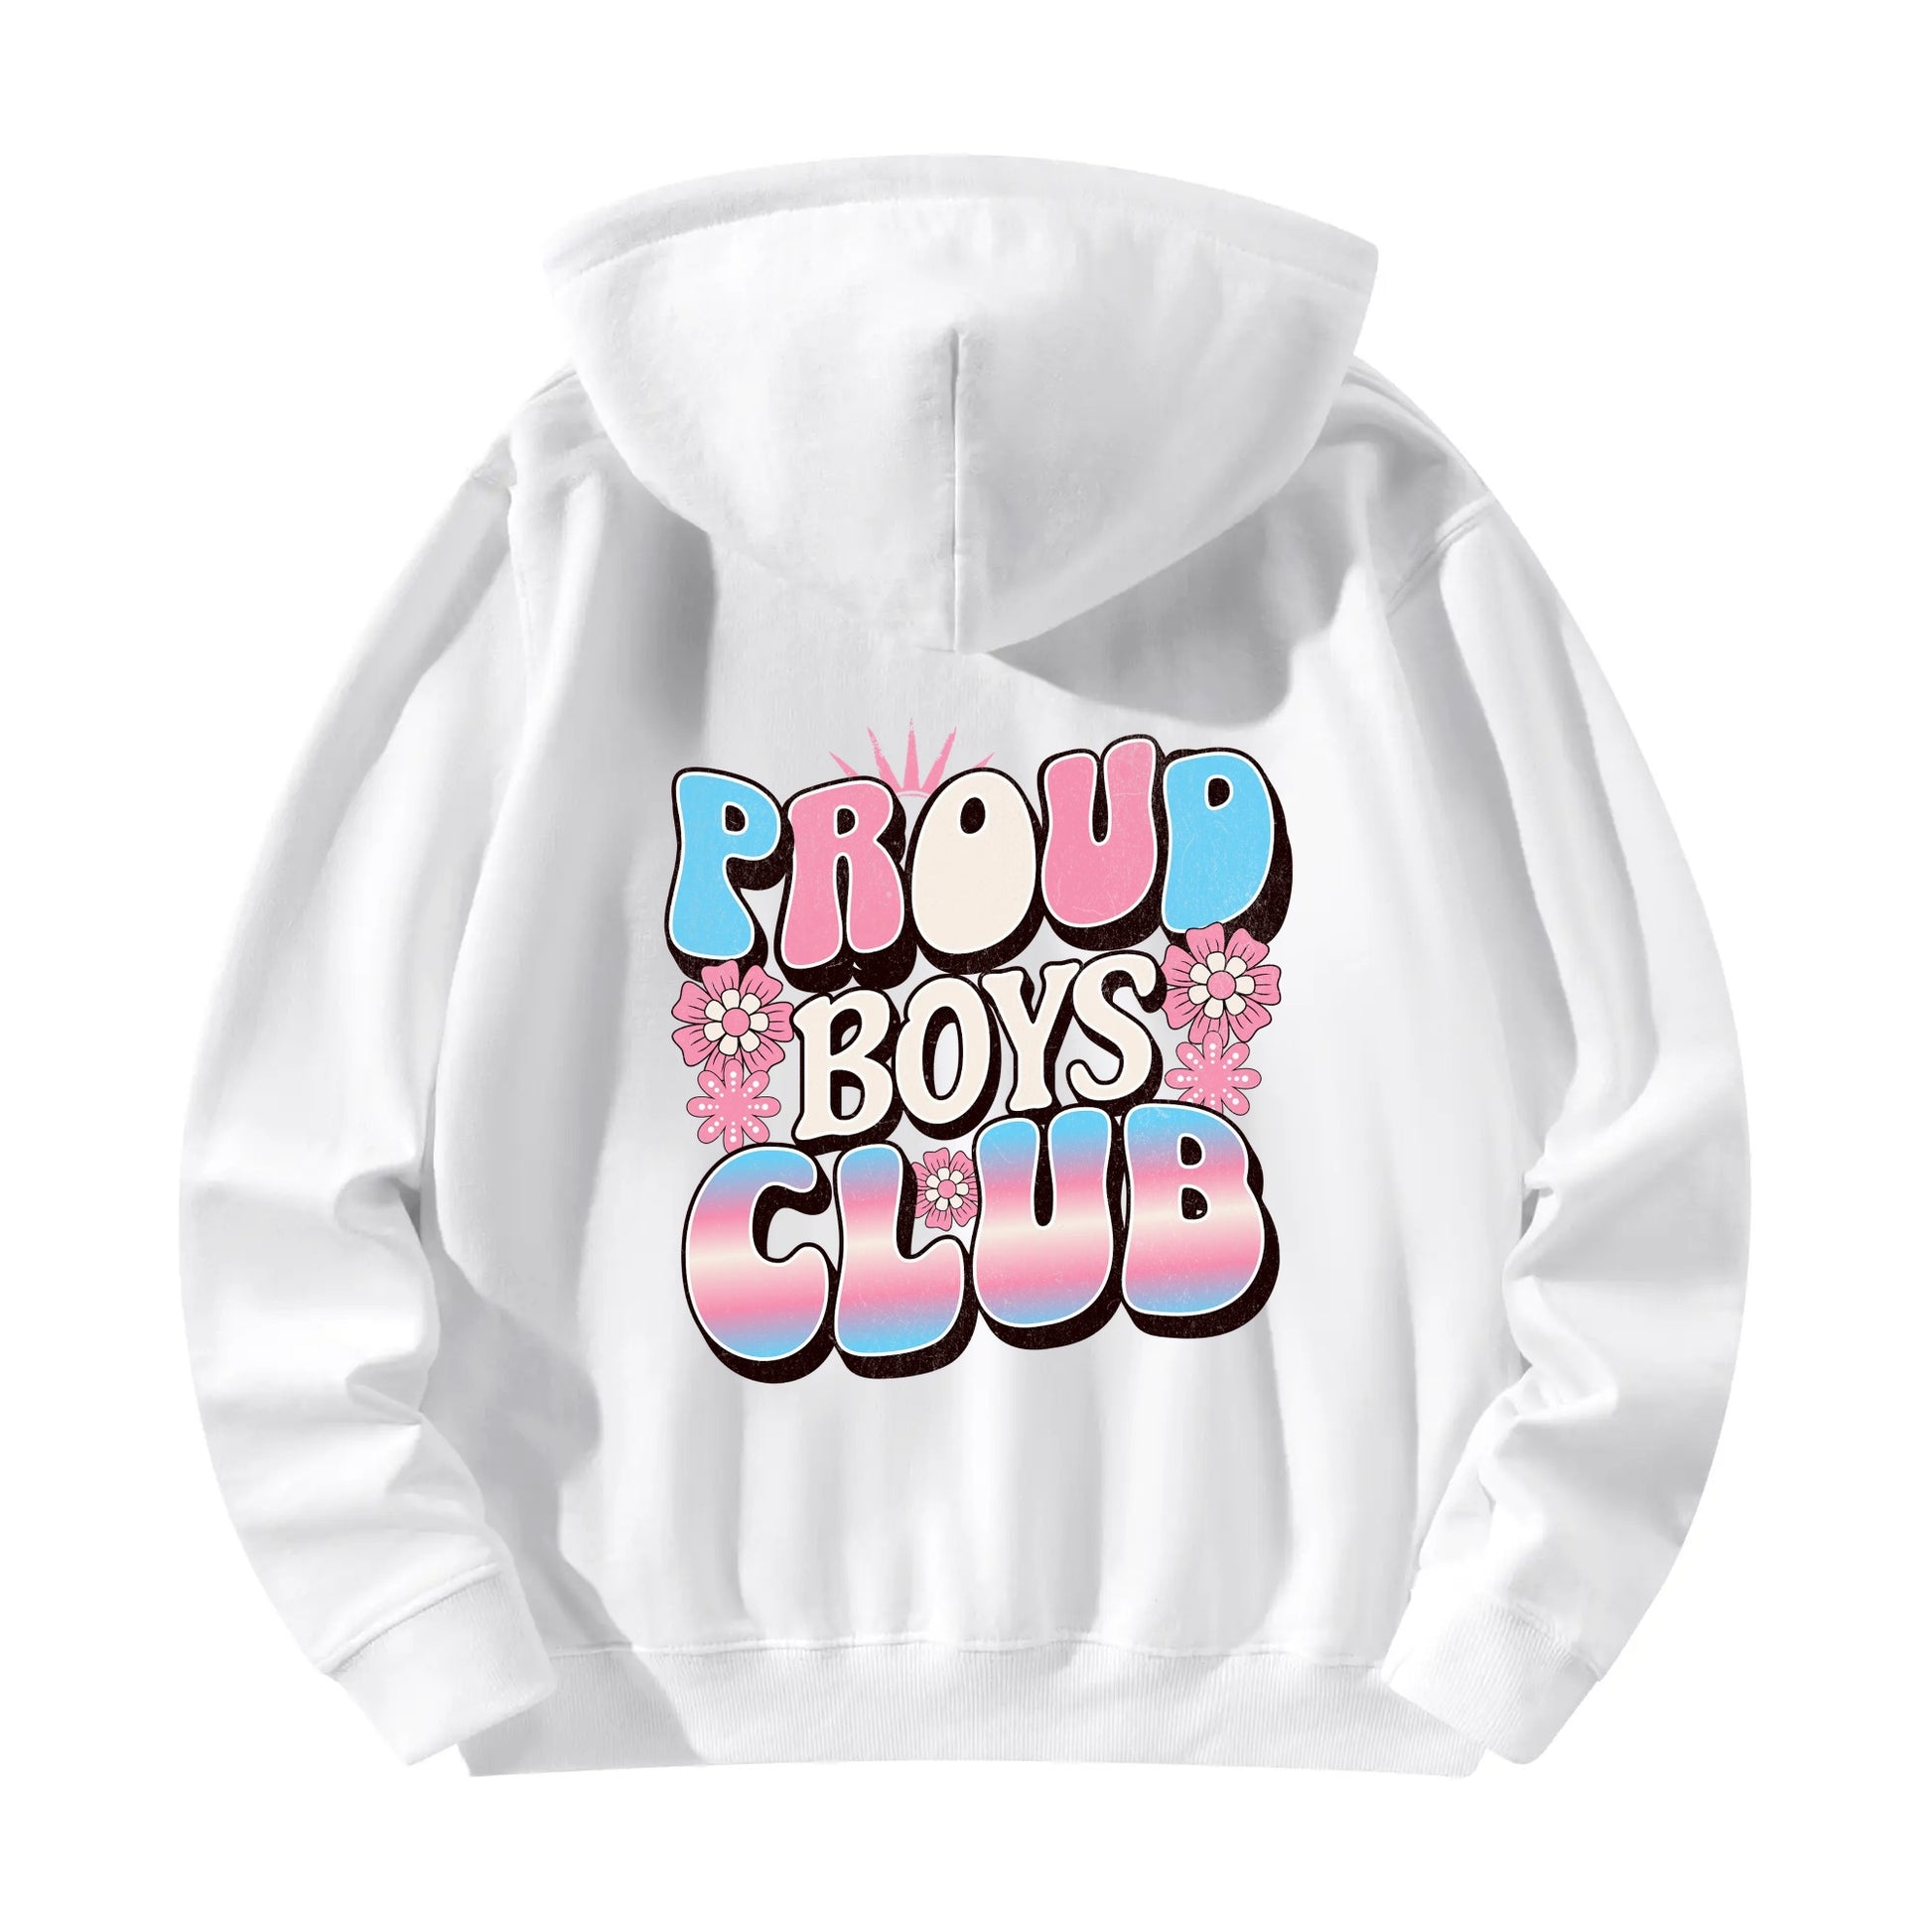 Proud Boys Club Transgender Pride Cotton Hoodie - Rose Gold Co. Shop